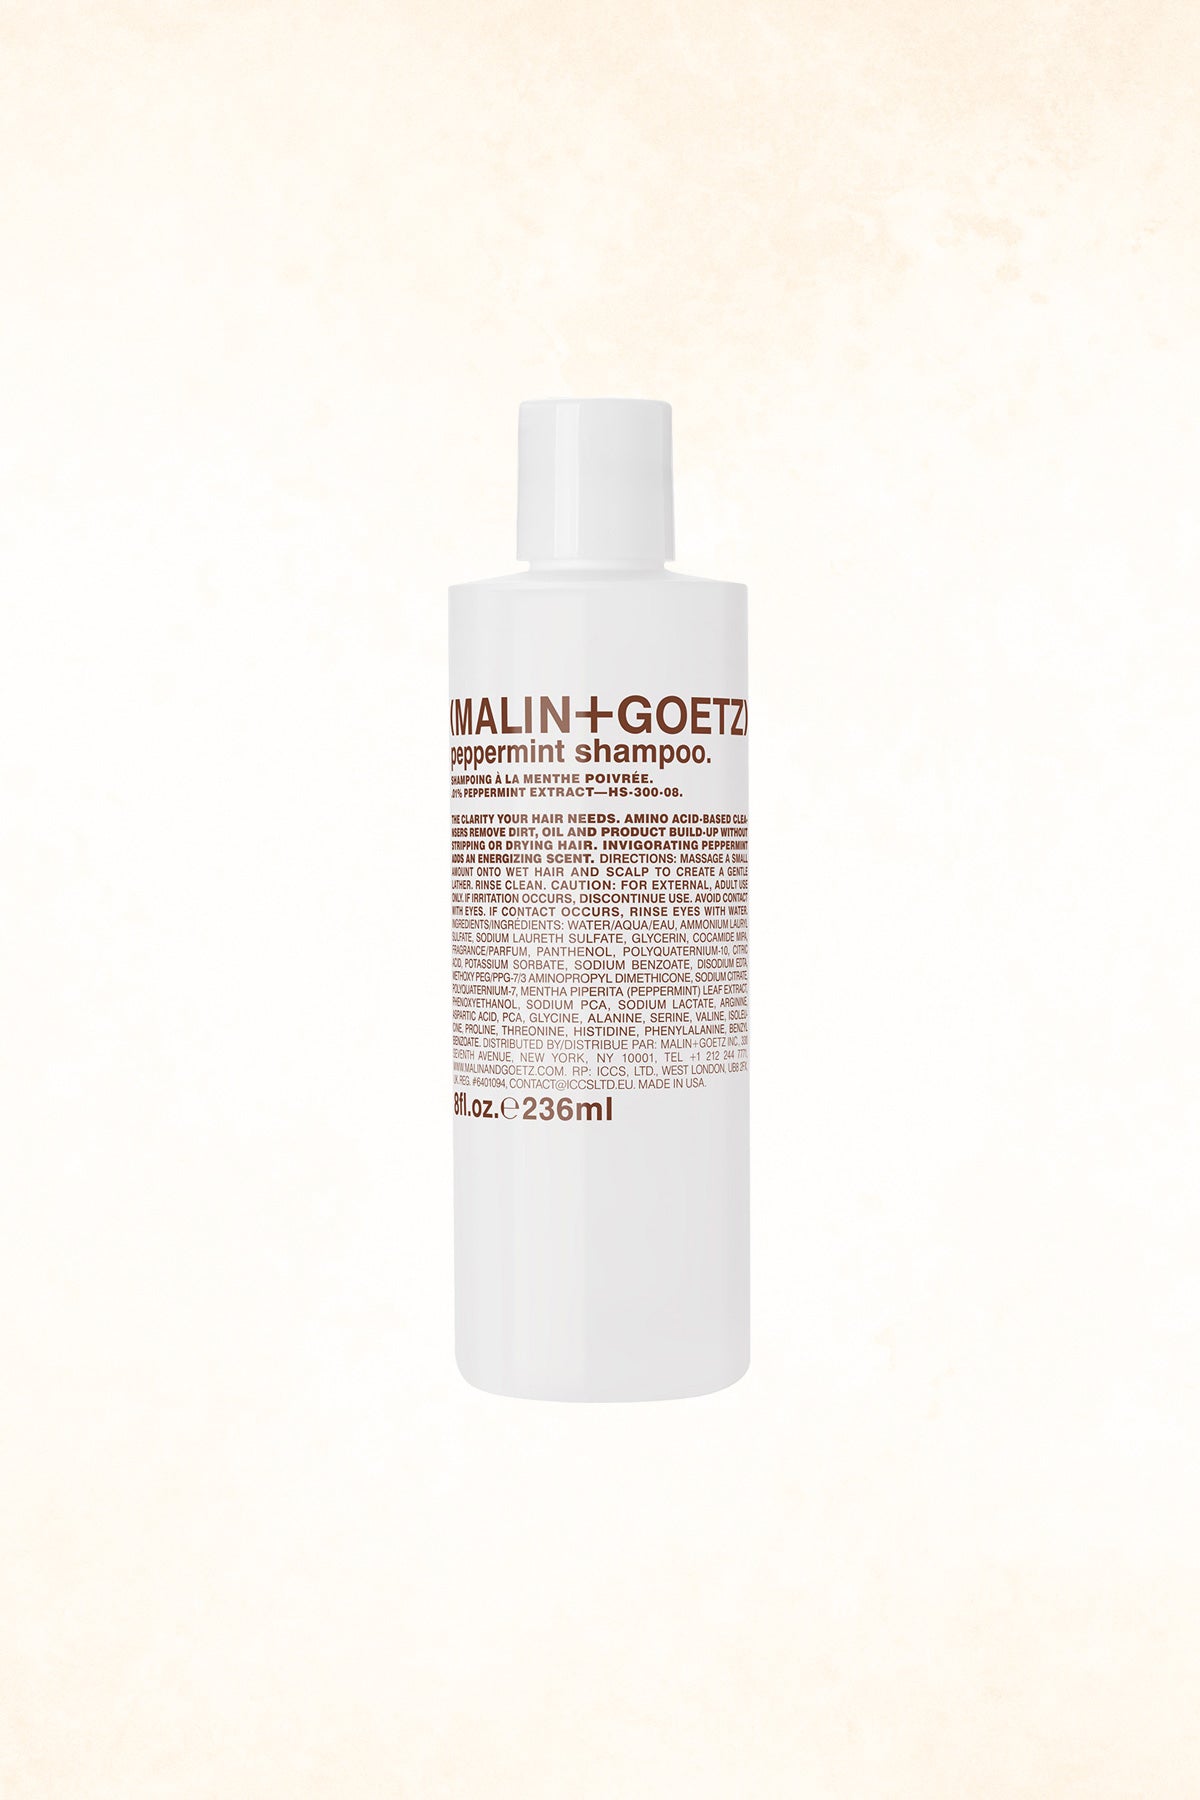 Malin+Goetz – Peppermint Shampoo 8 oz / 236 ml